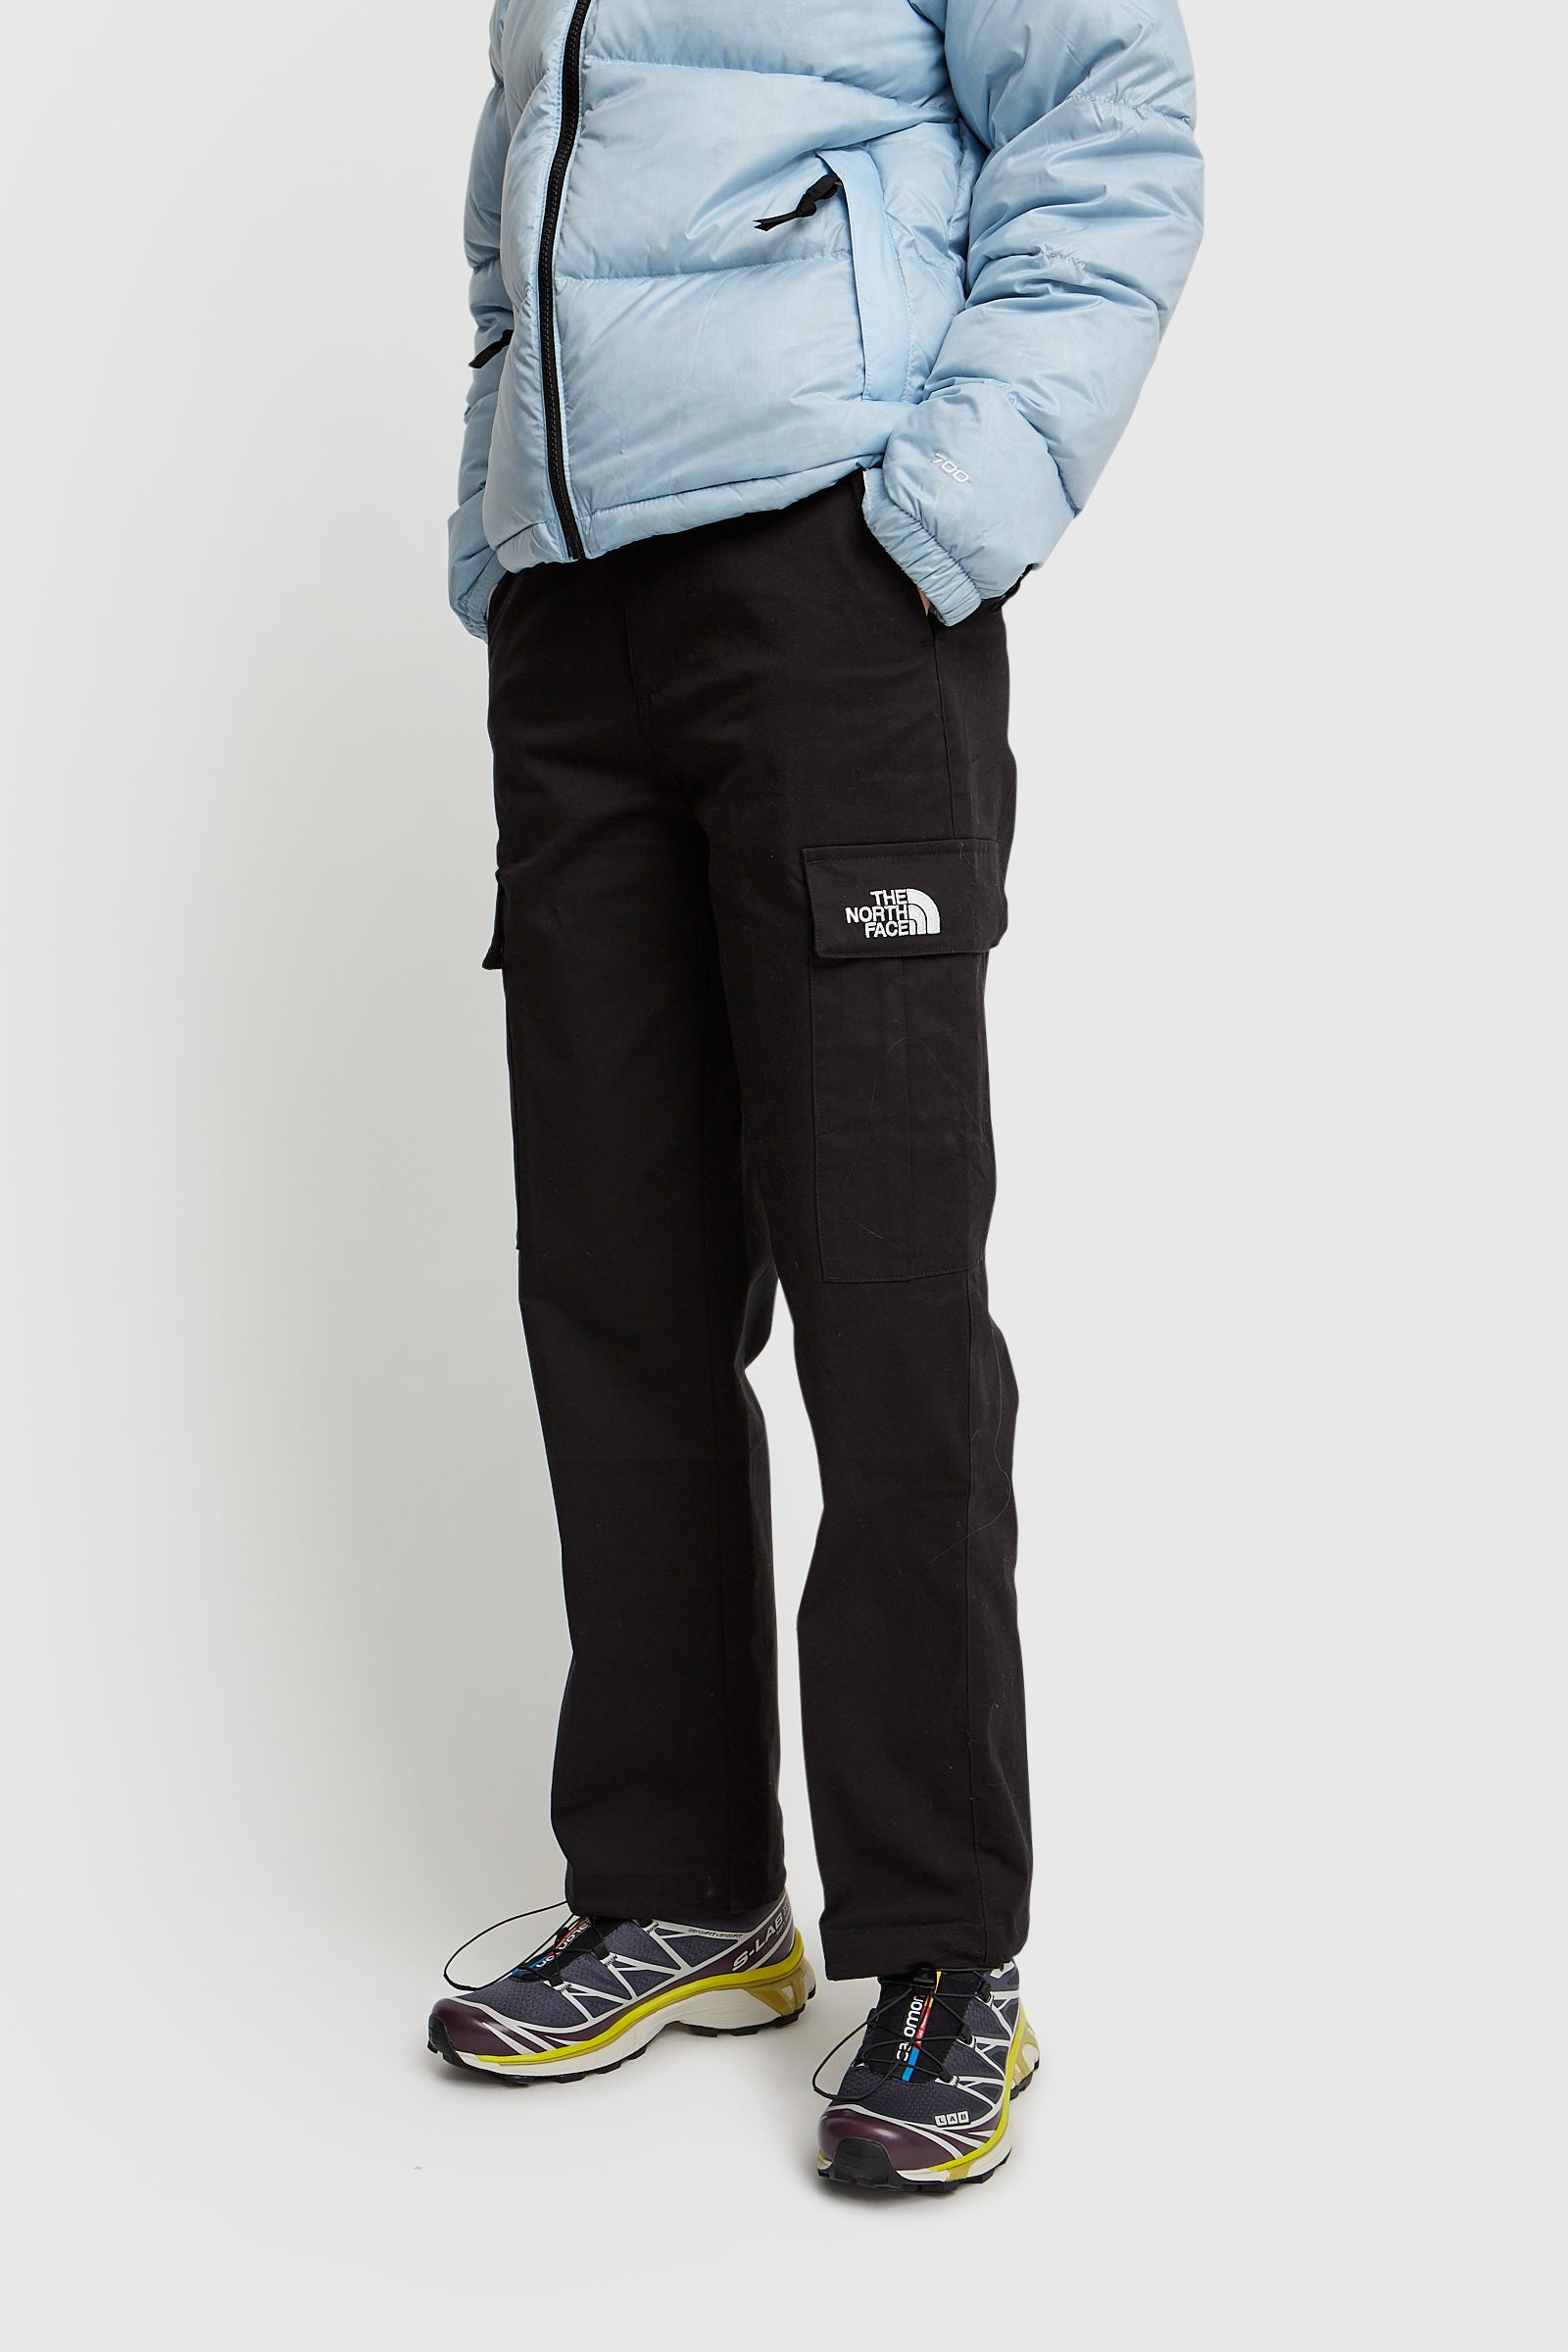 The North Face DIABLO - Outdoor trousers - asphalt grey/anthracite -  Zalando.de